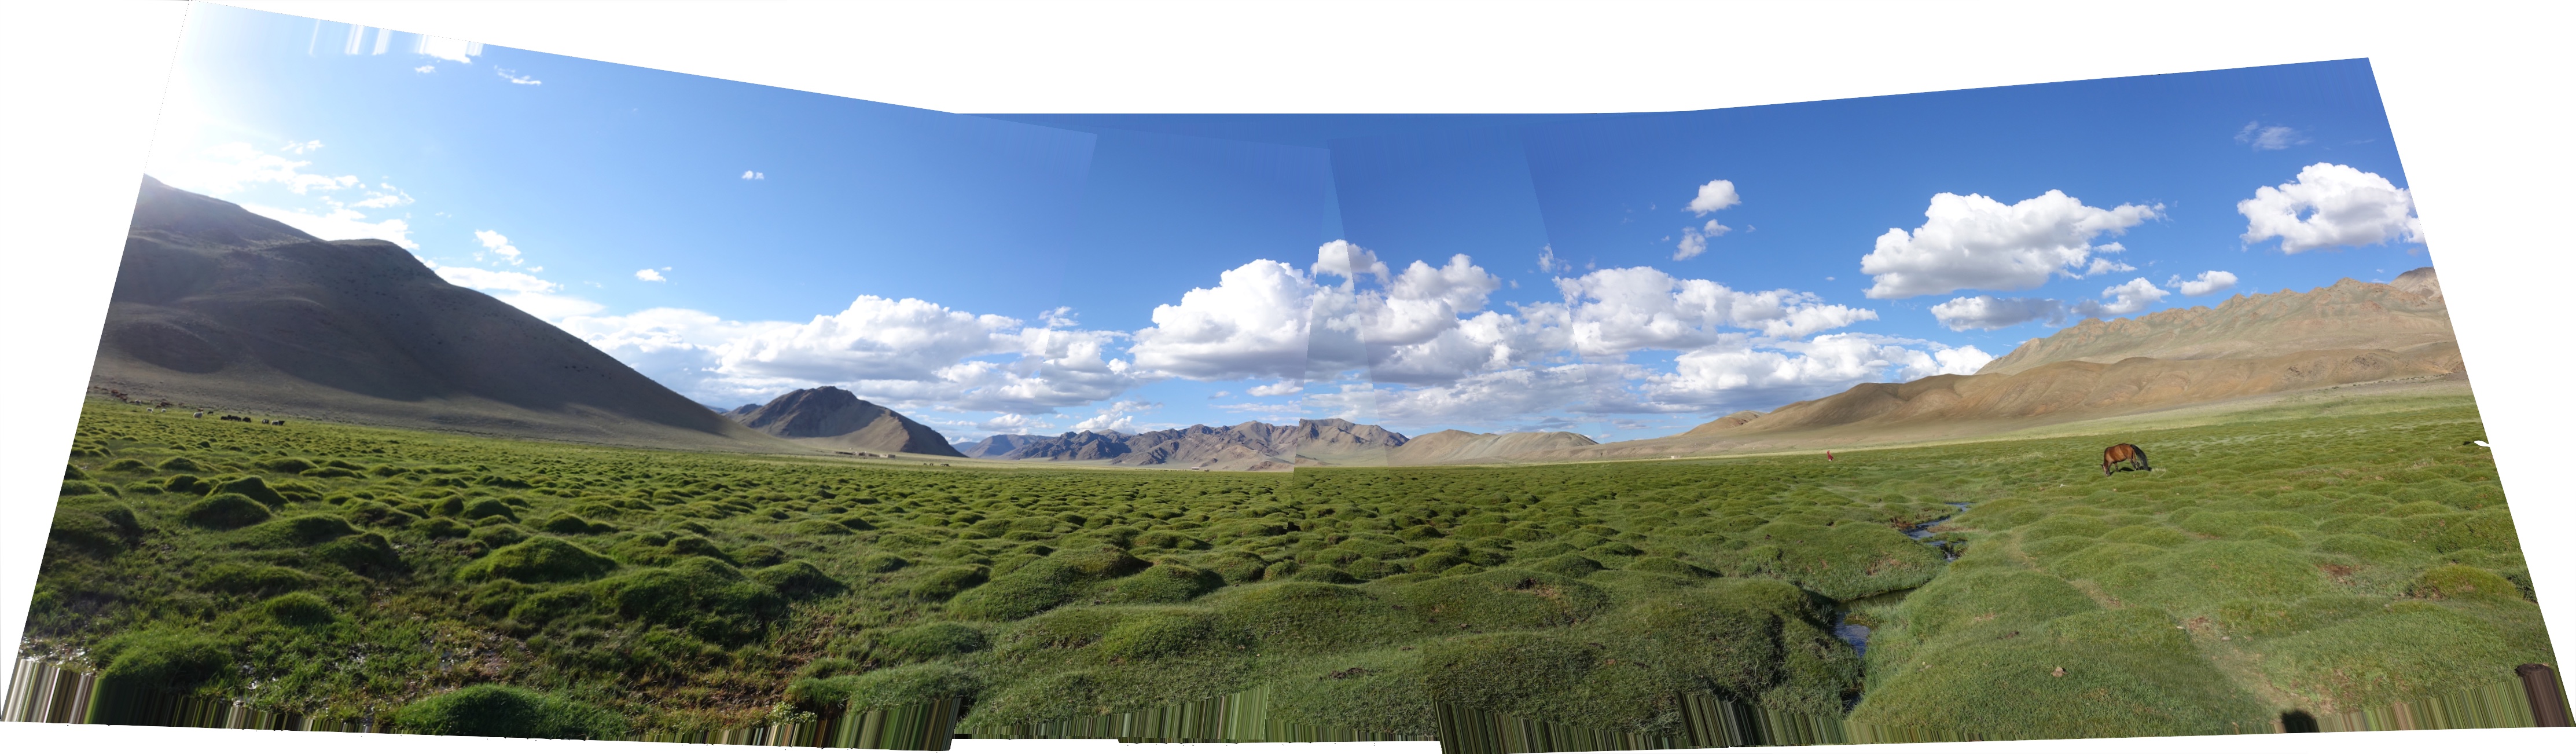 field_panorama.jpg